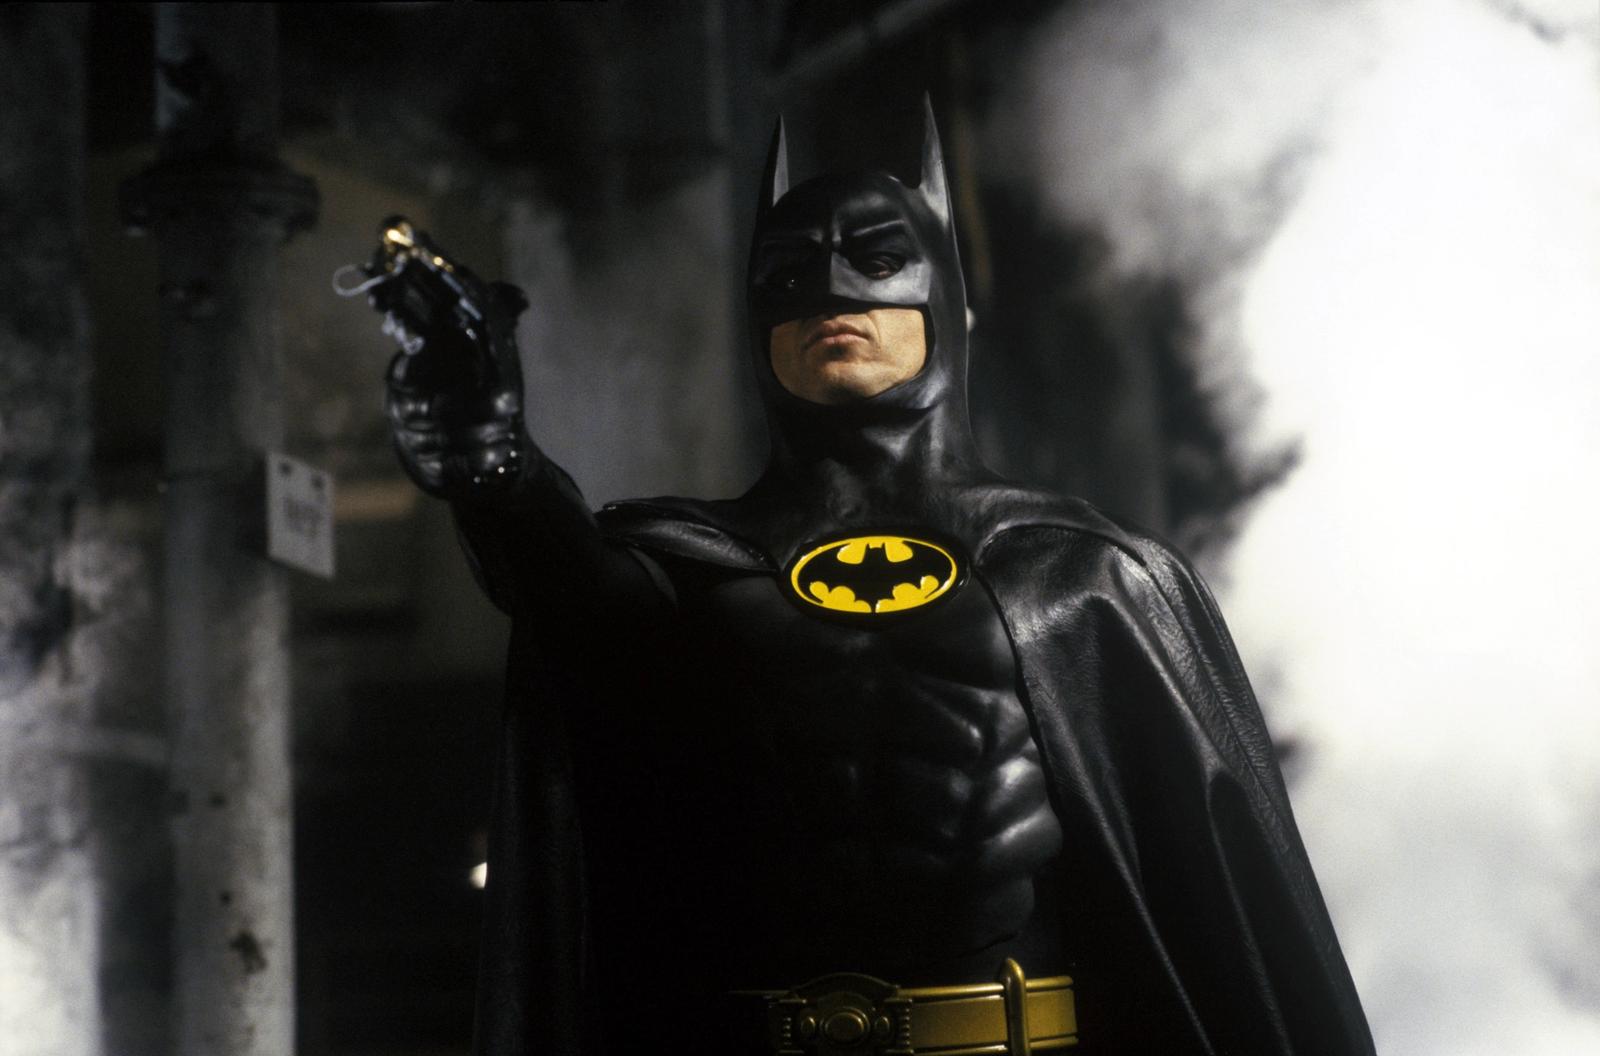 The Batman holds a gun amidst white smoke.